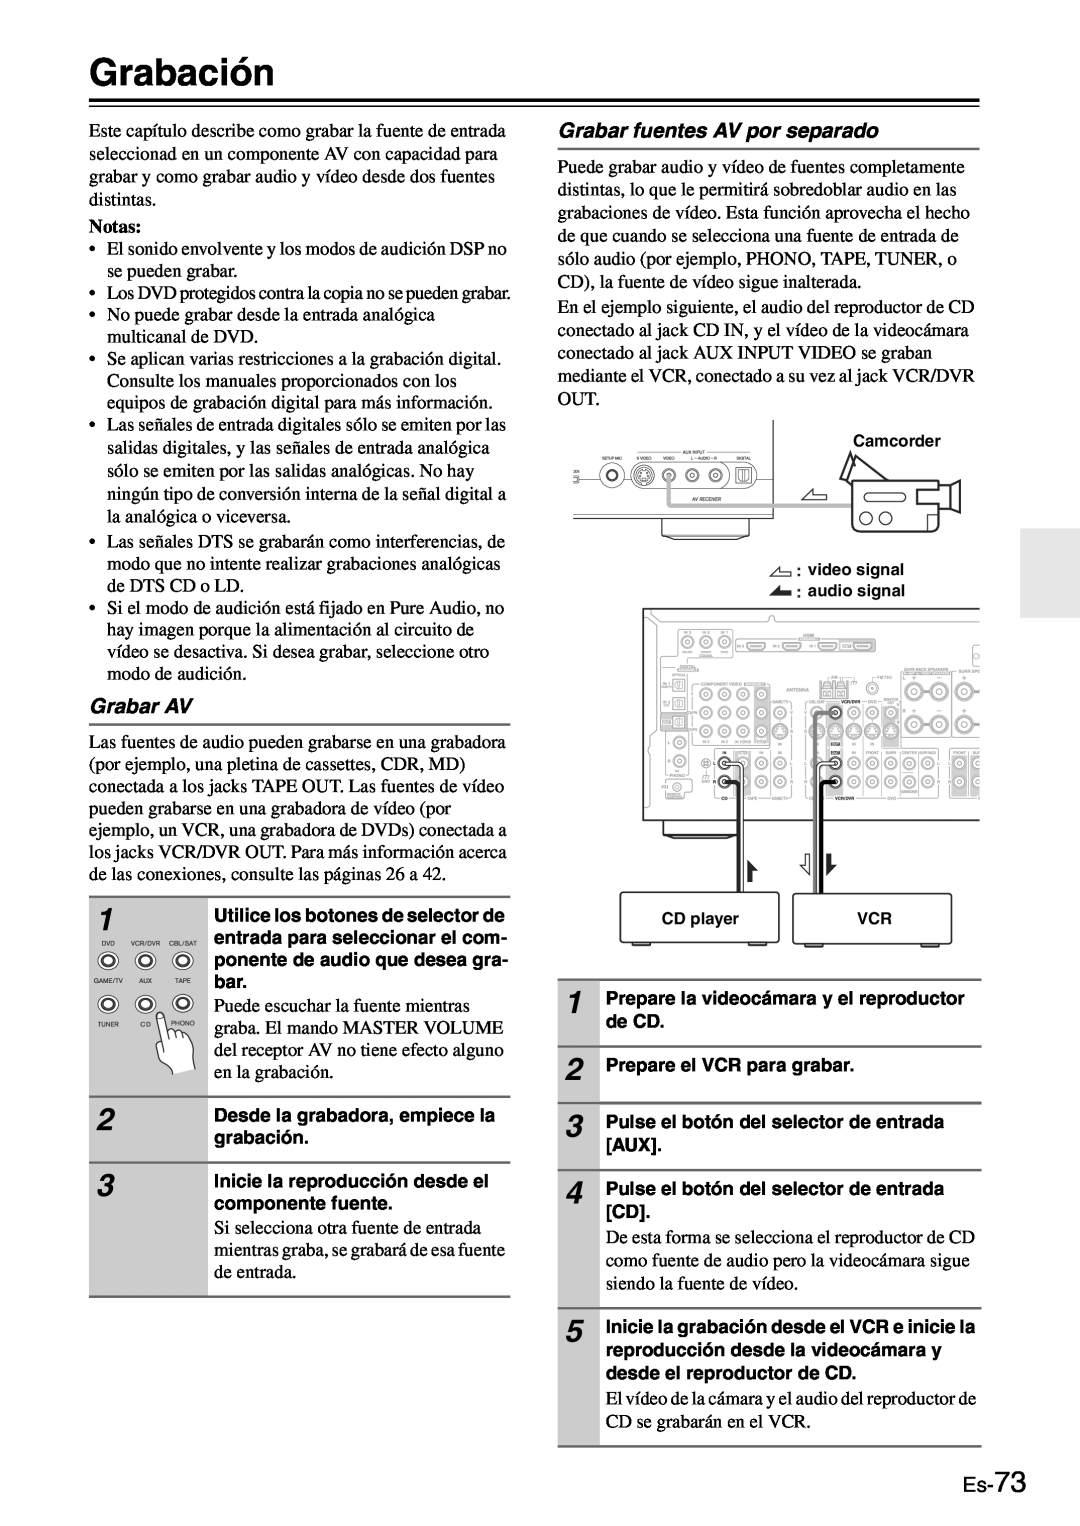 Onkyo TX-SR705 manual Grabación, Grabar AV, Grabar fuentes AV por separado, Es-73, Notas 